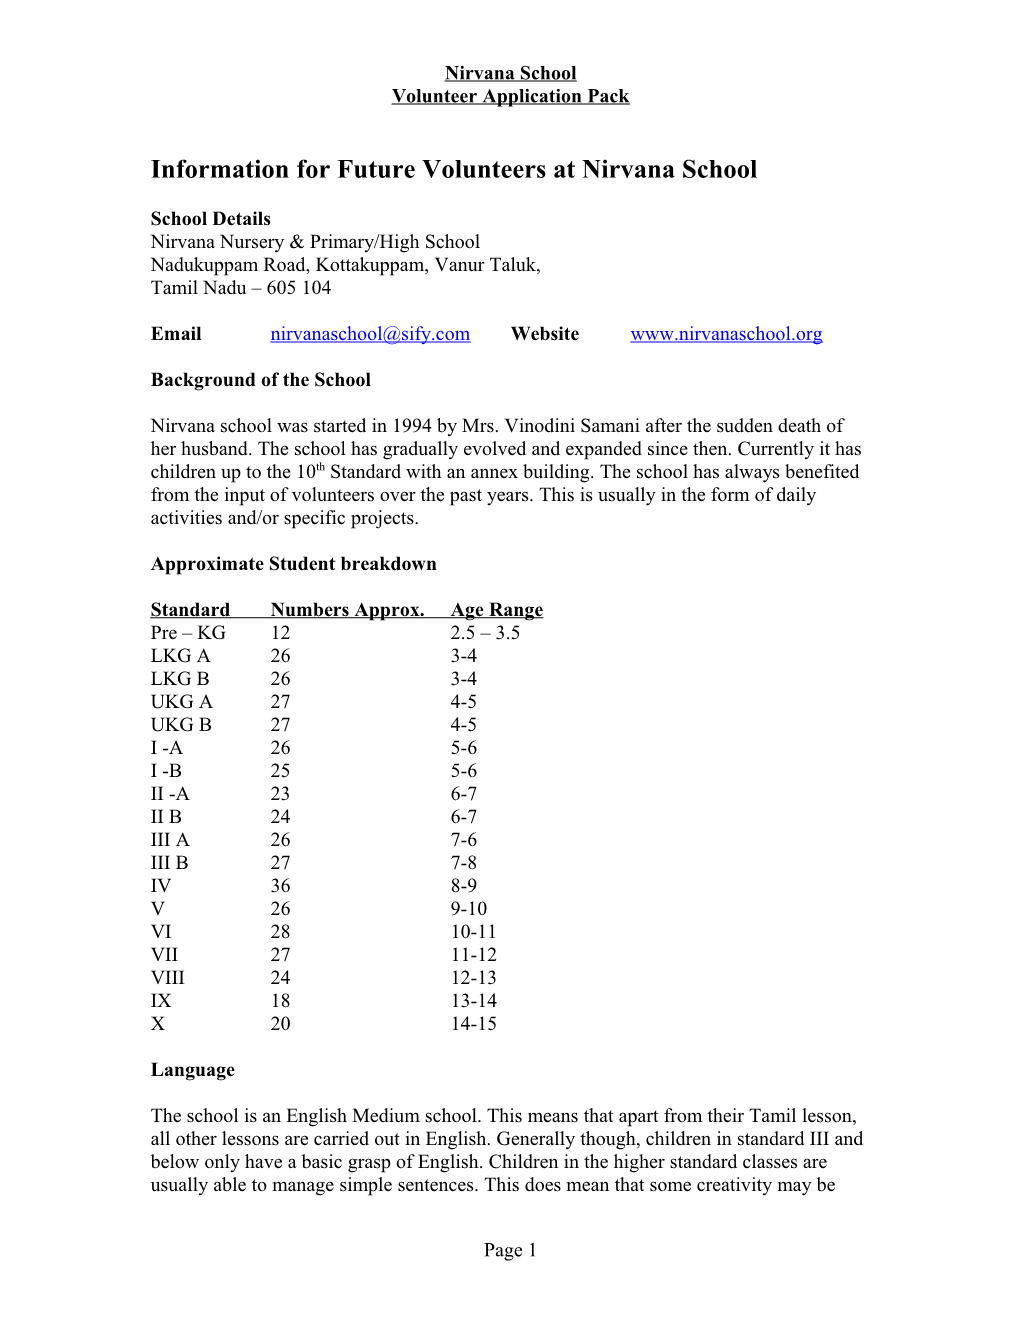 Information for Future Volunteers at Nirvana School